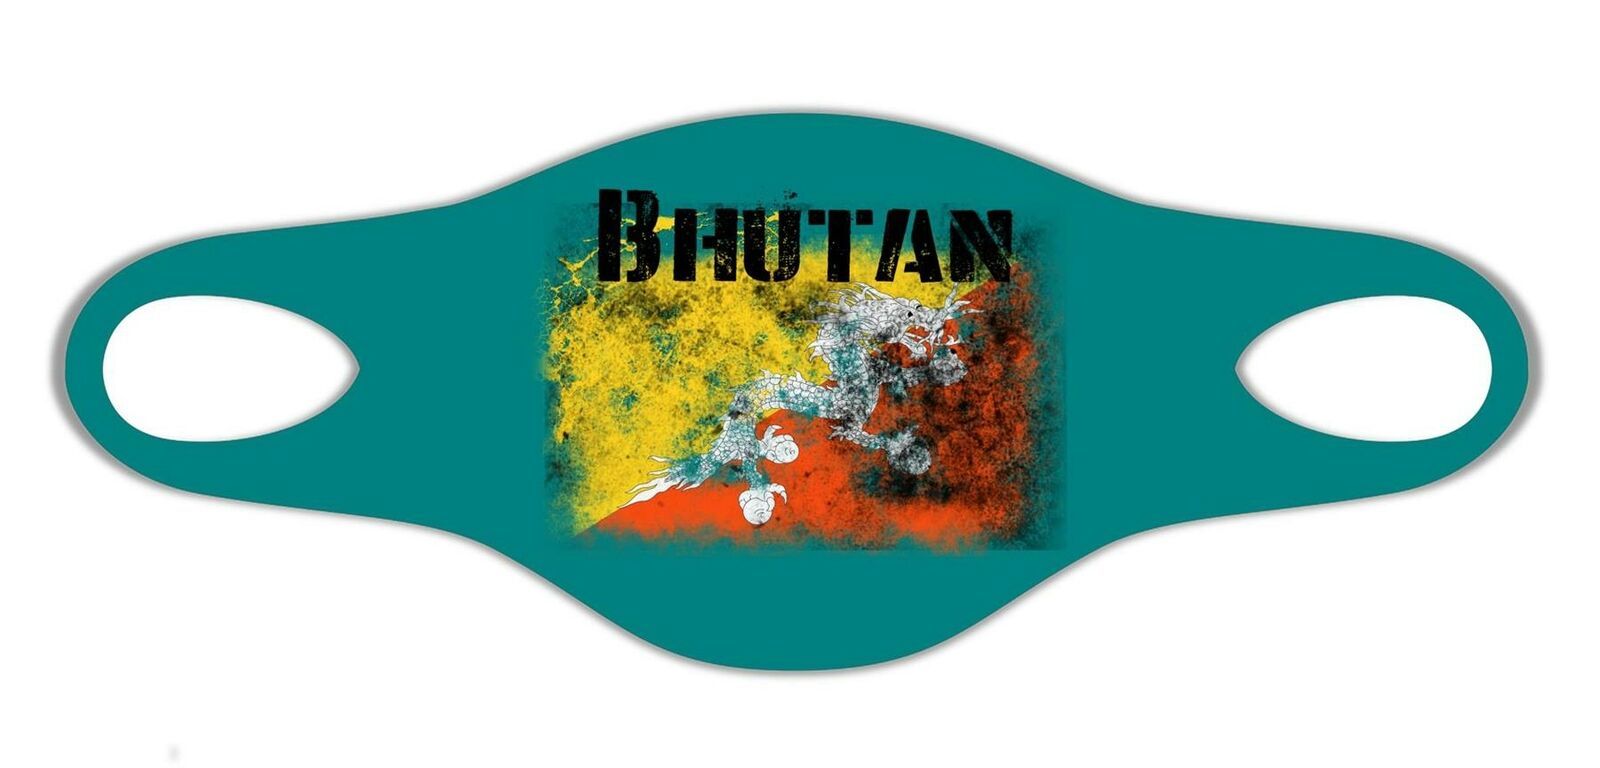 Bhutan National Flag Soft Face Mask Protective Reusable washable Breathable